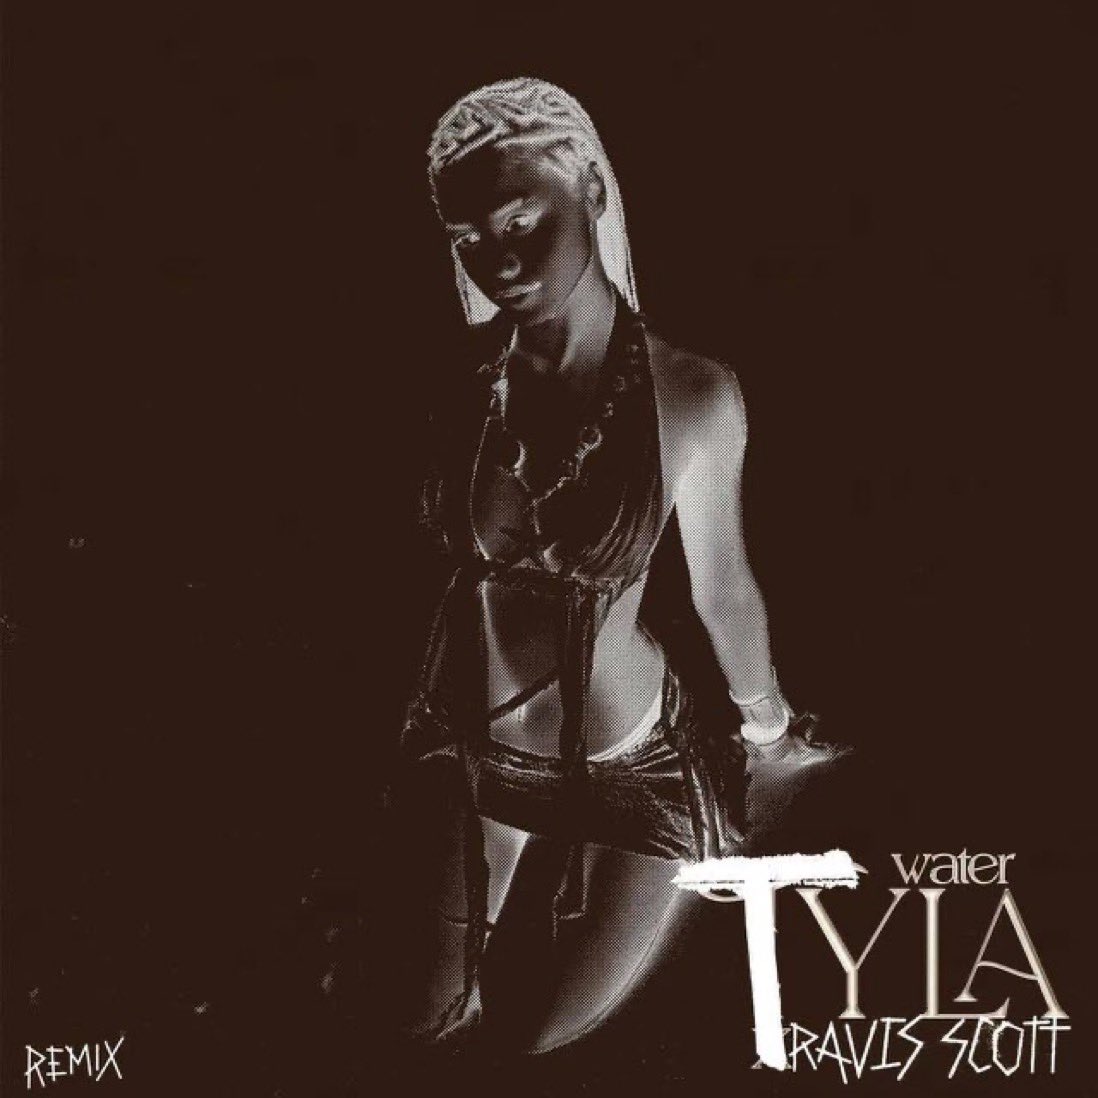 Tyla's 'Water' remix will feature Travis Scott.